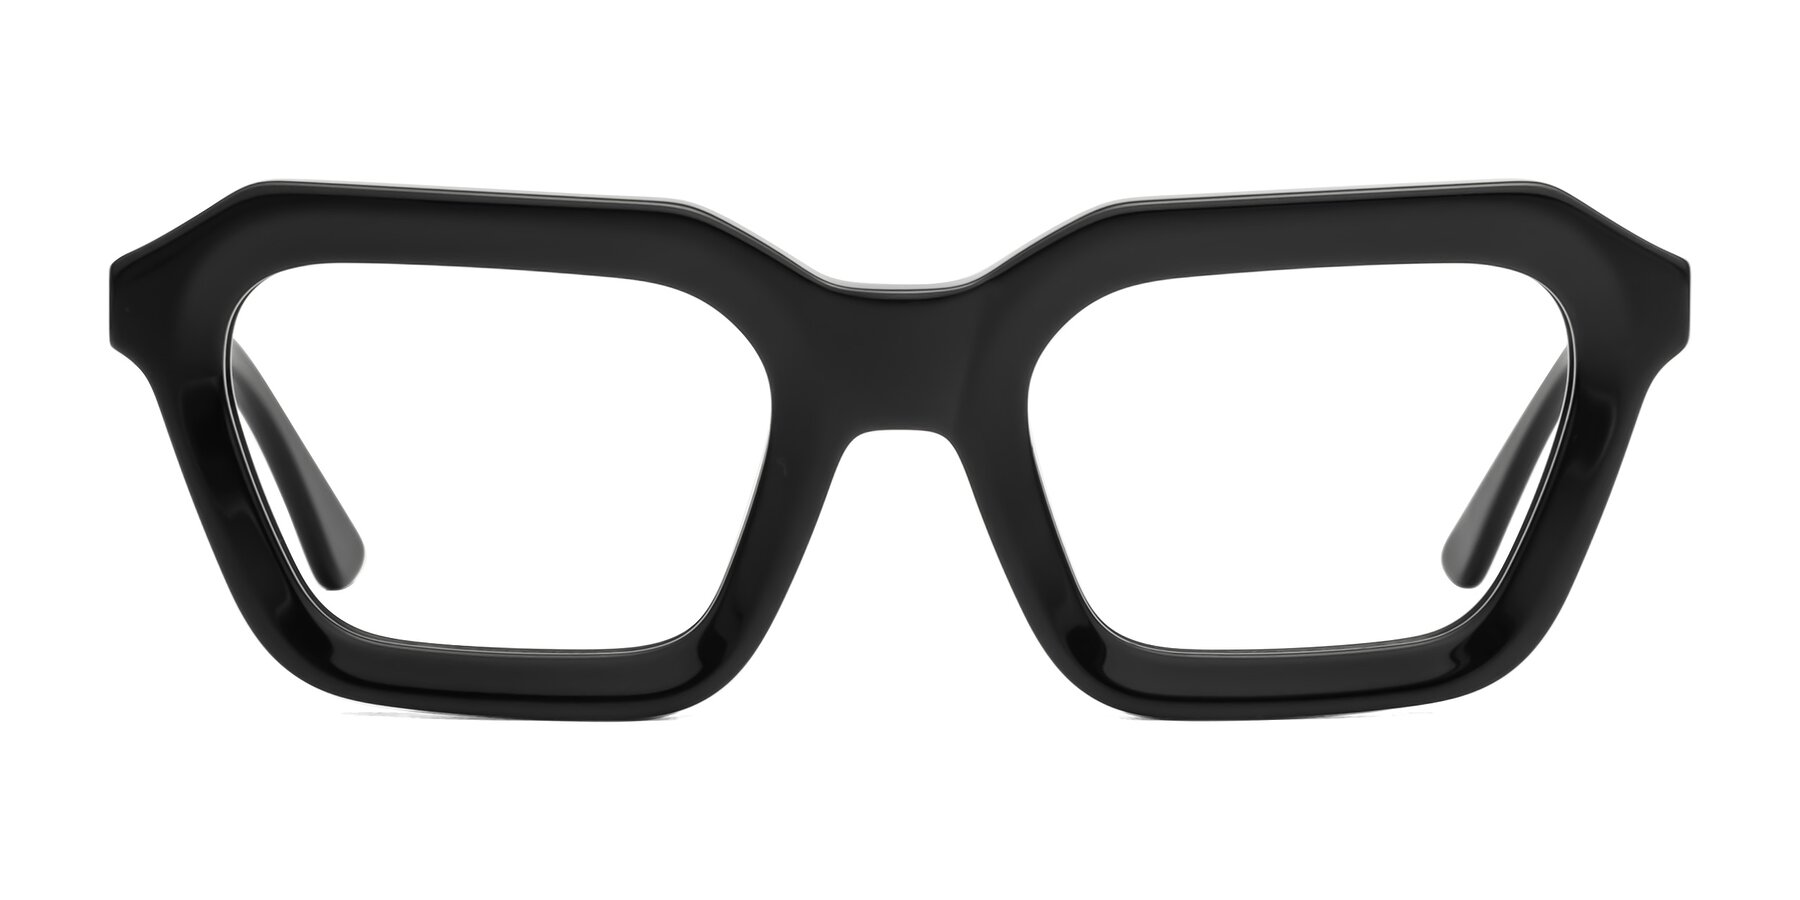 George - Black Sunglasses Frame